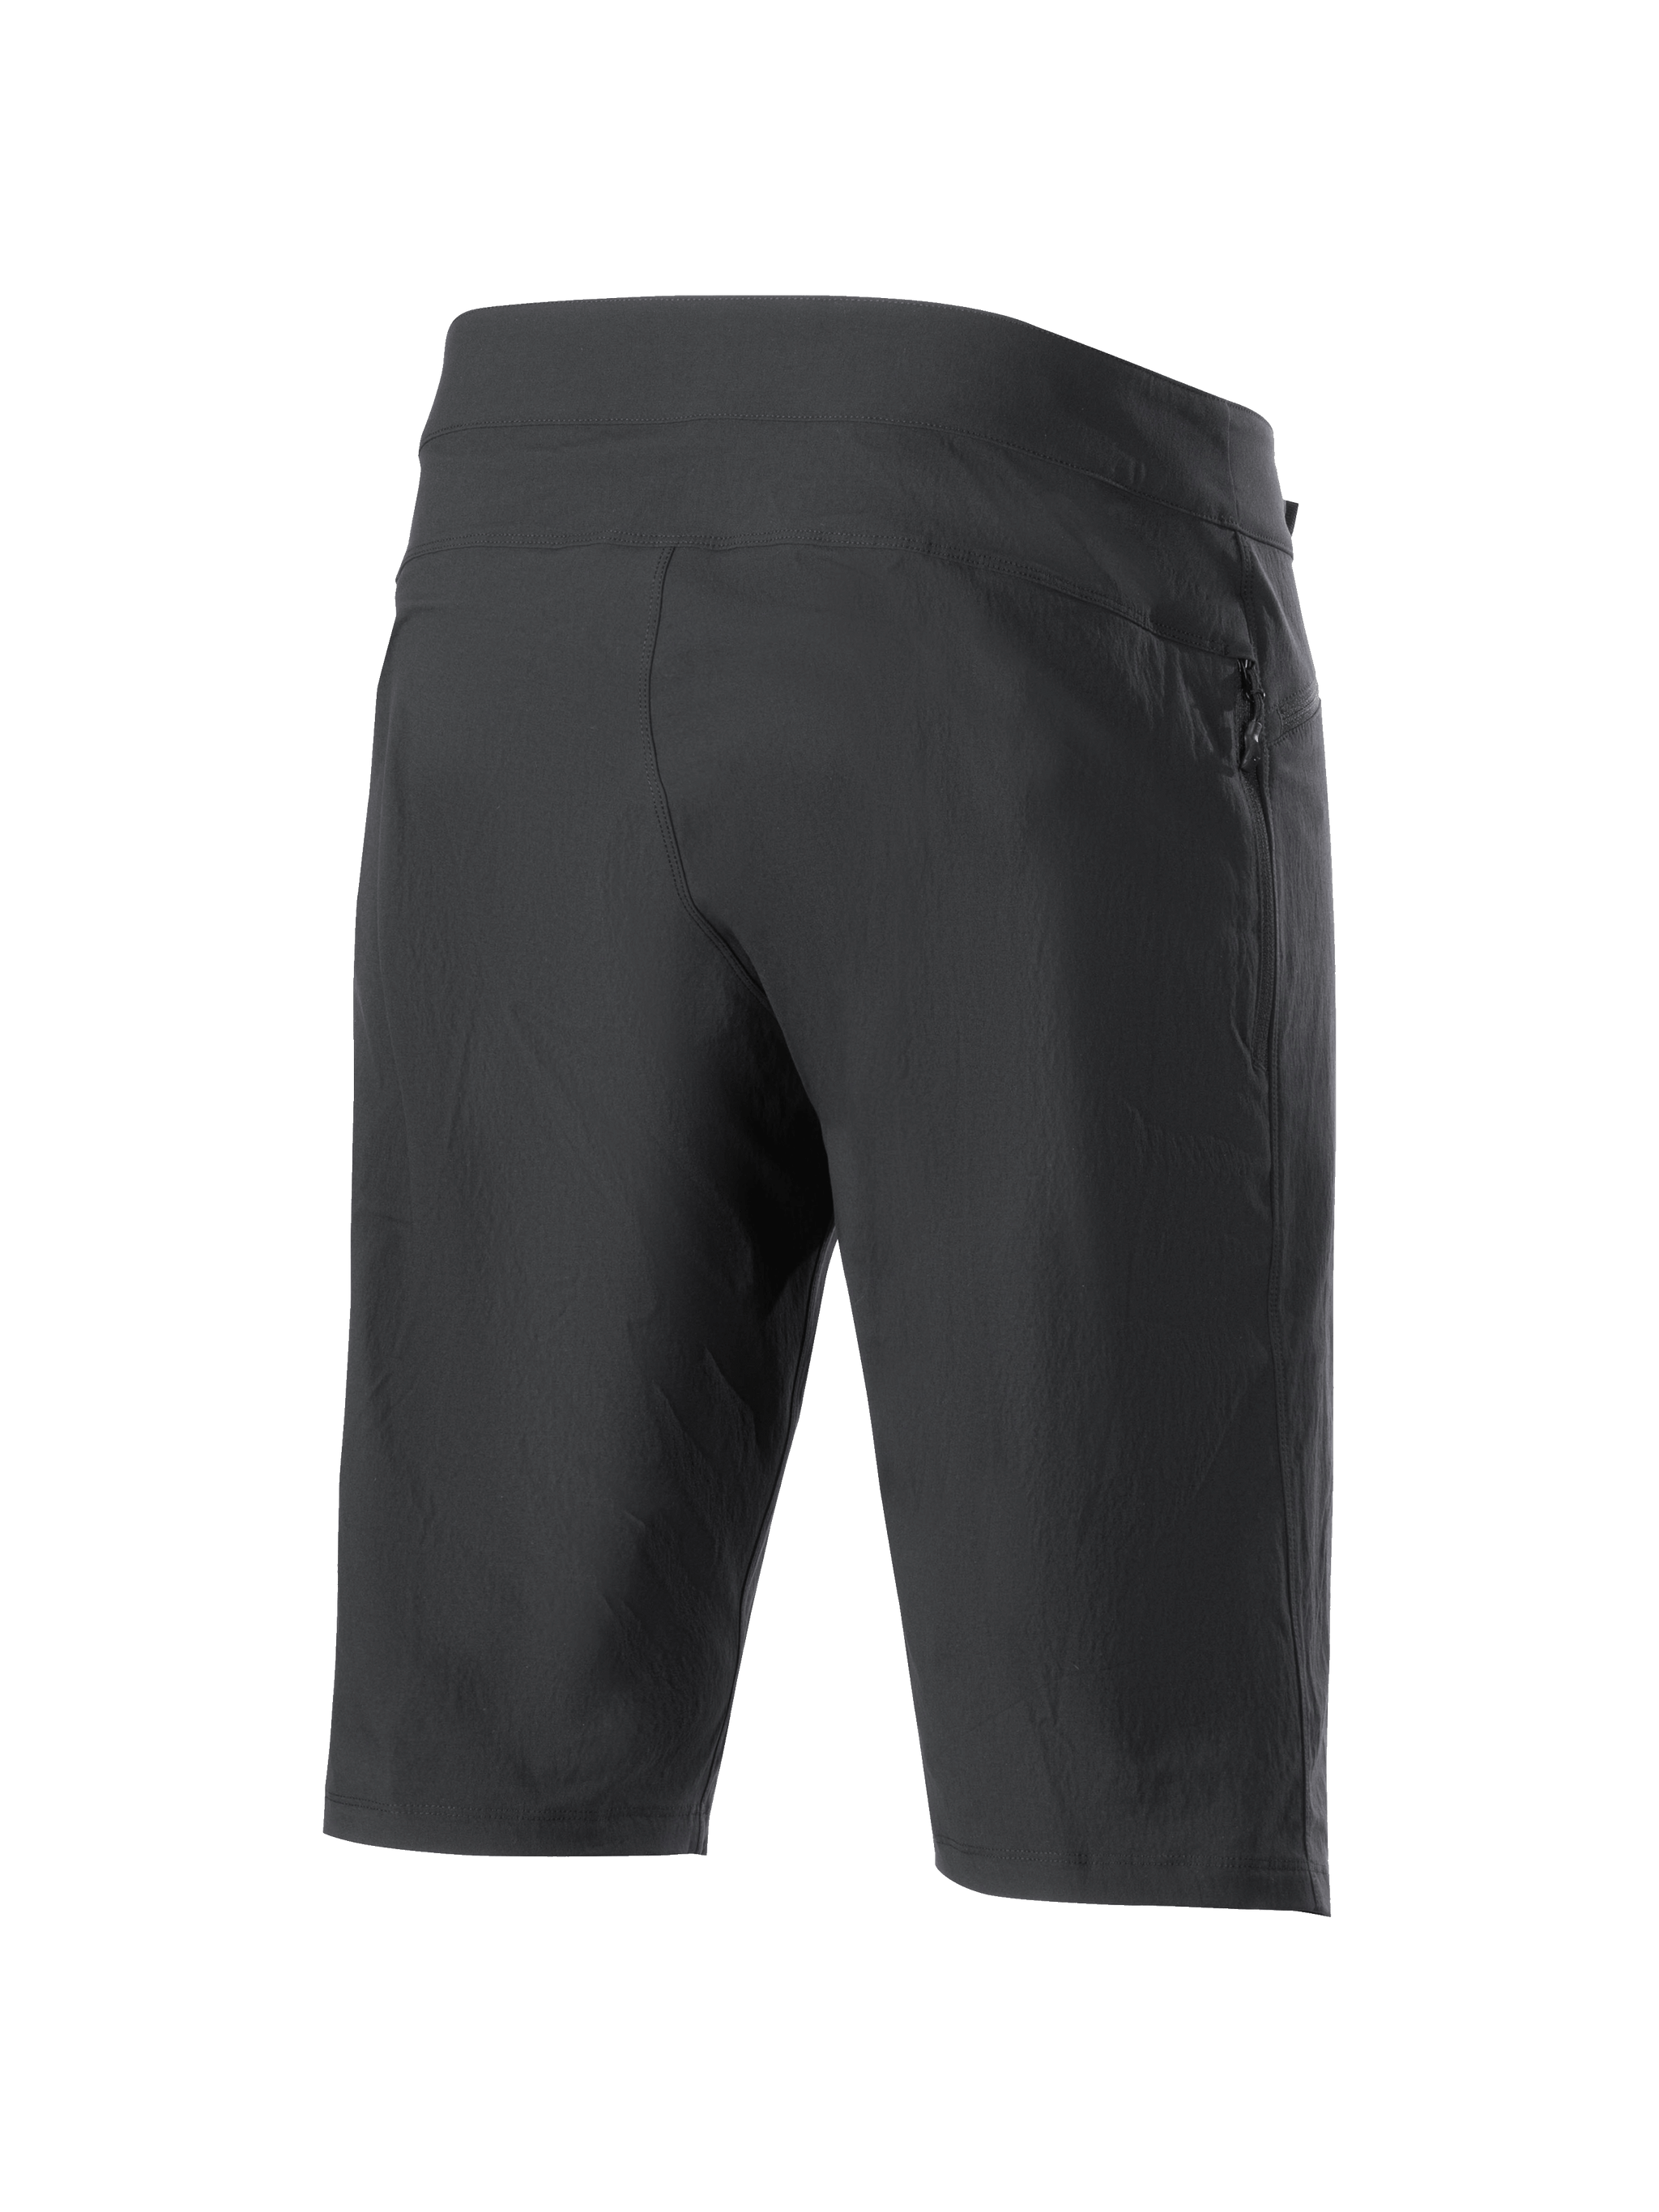 A-Dura Liner Pantalones cortos